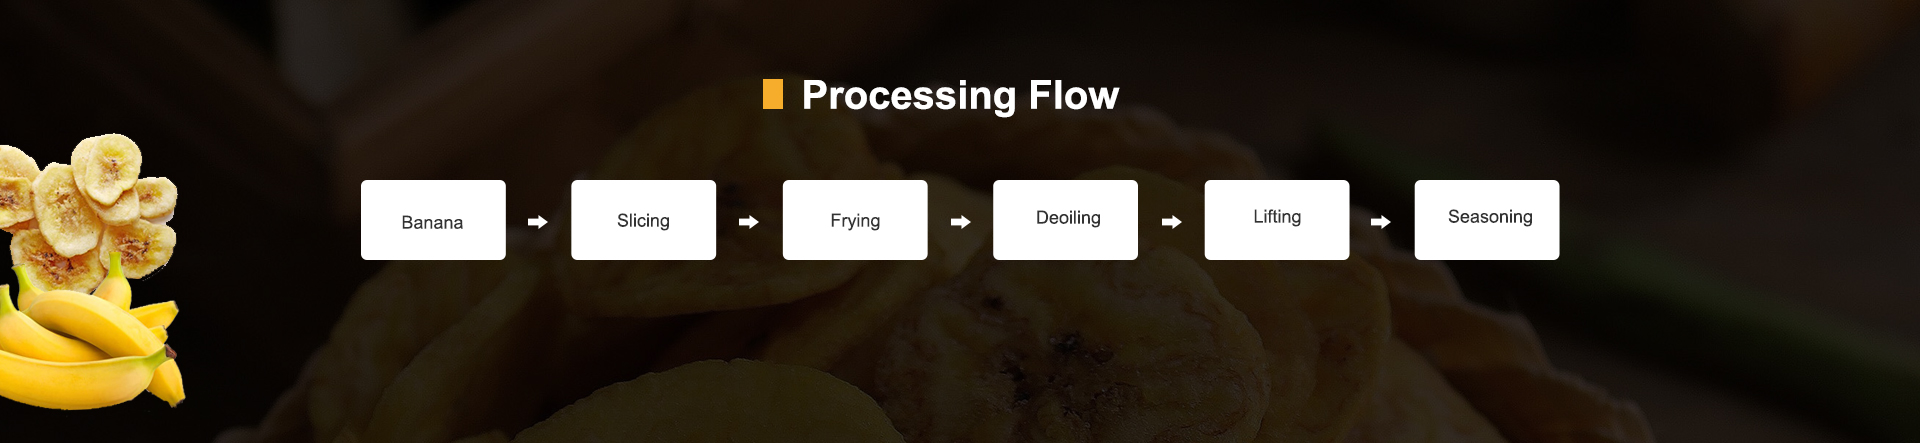 Production Process of banana chips